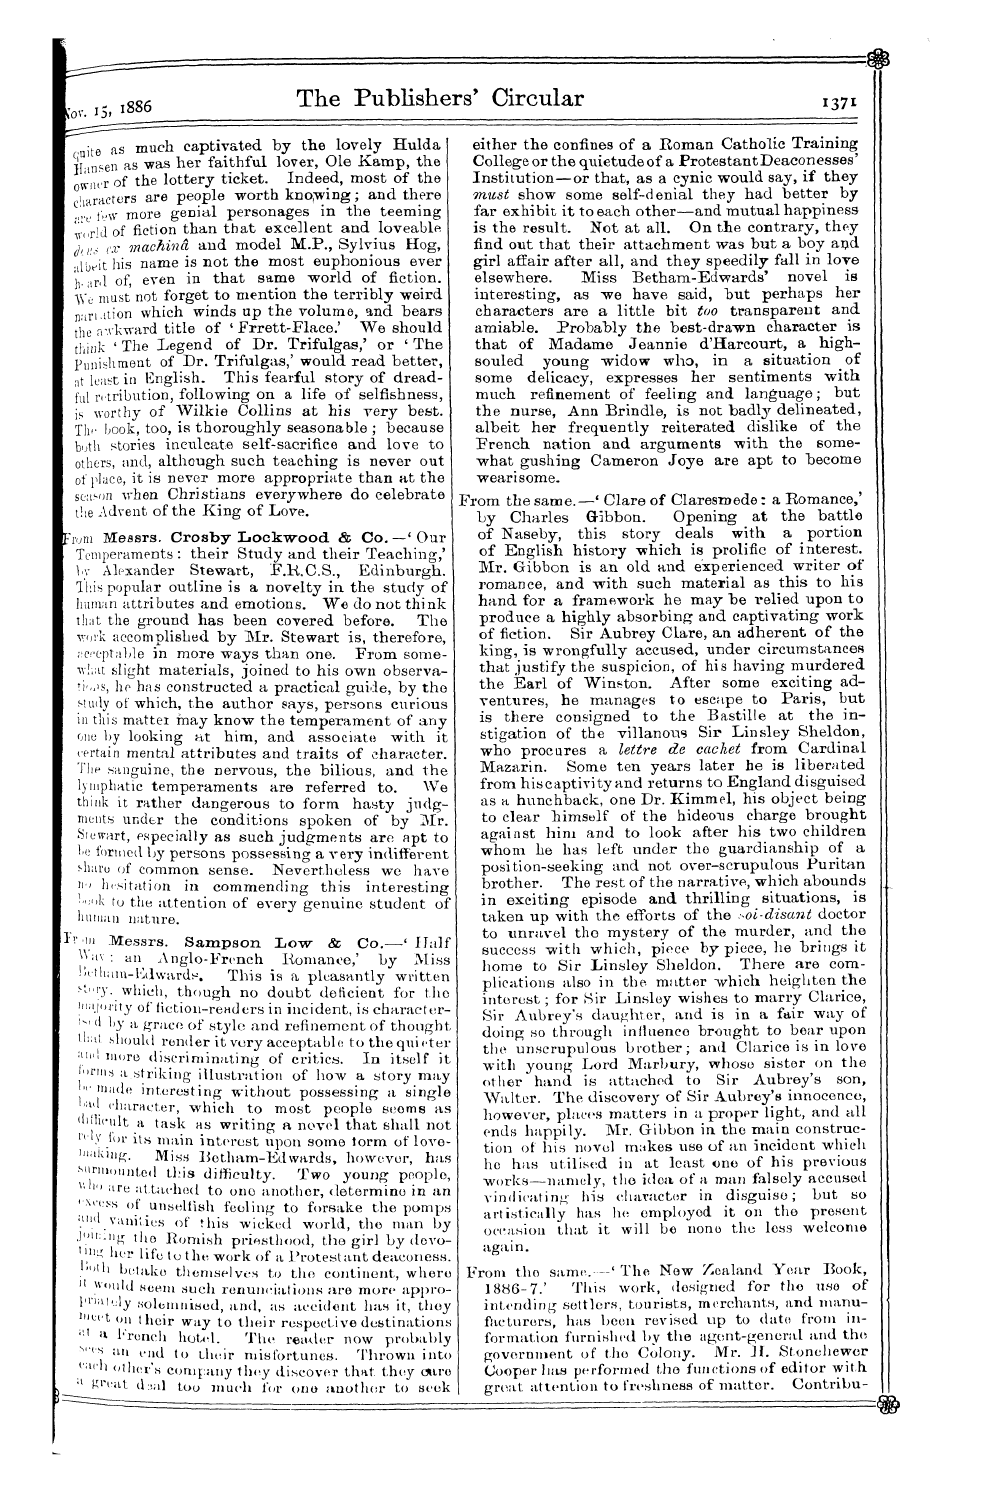 Publishers’ Circular (1880-1890): jS F Y, 1st edition: 13